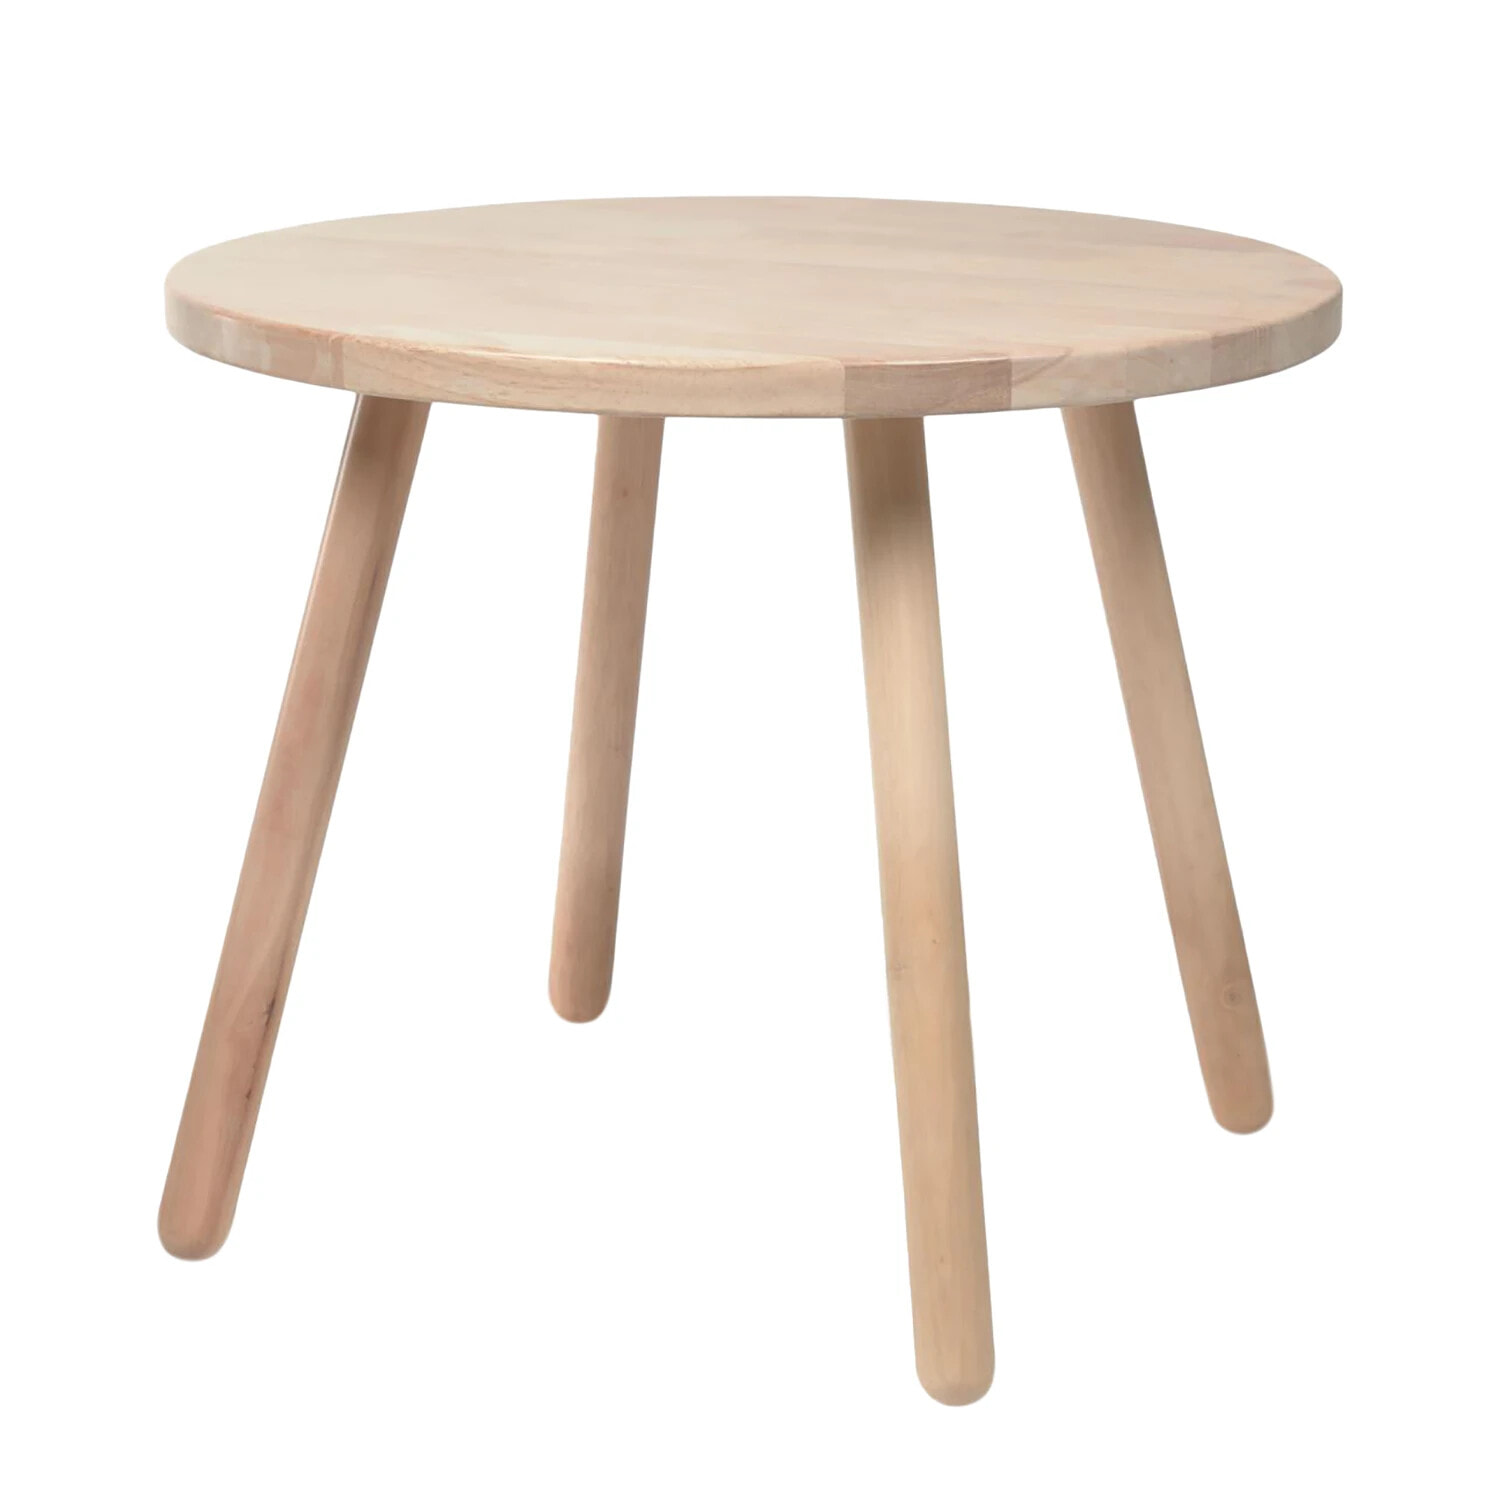 Tabelle ist auf Wasserbasis und lackiert in Nitrocellulose. Seine Farbe ist Rubber wood natural color.